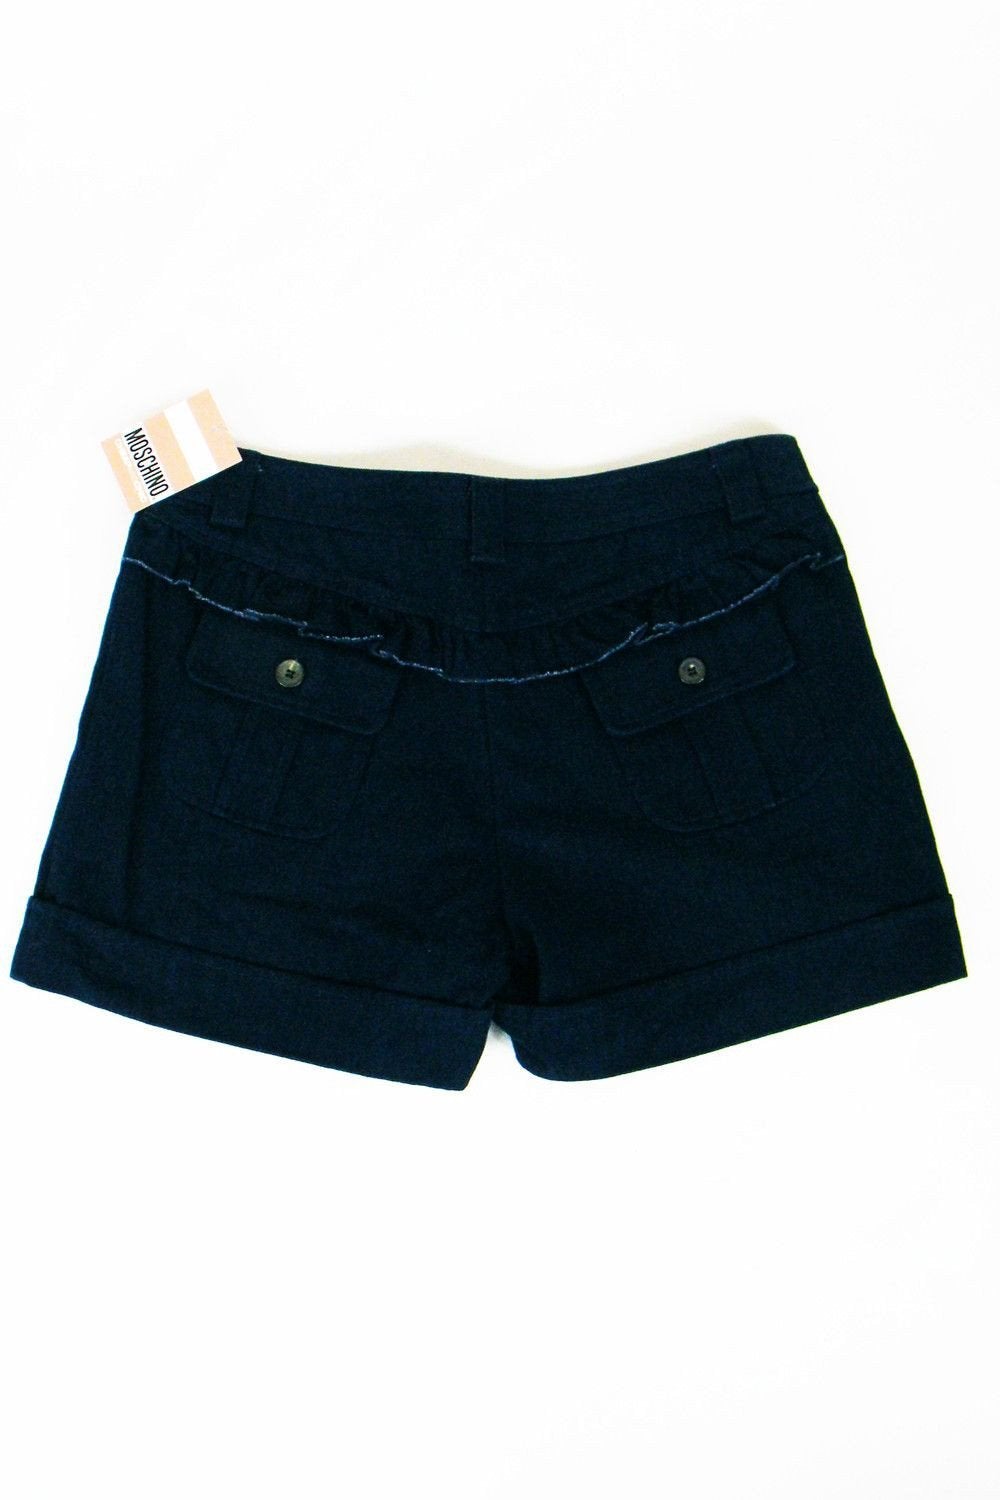 MOSCHINO CHEAP & CHIC denim shorts (UK 12)-Moschino Cheap and Chic-The Freperie